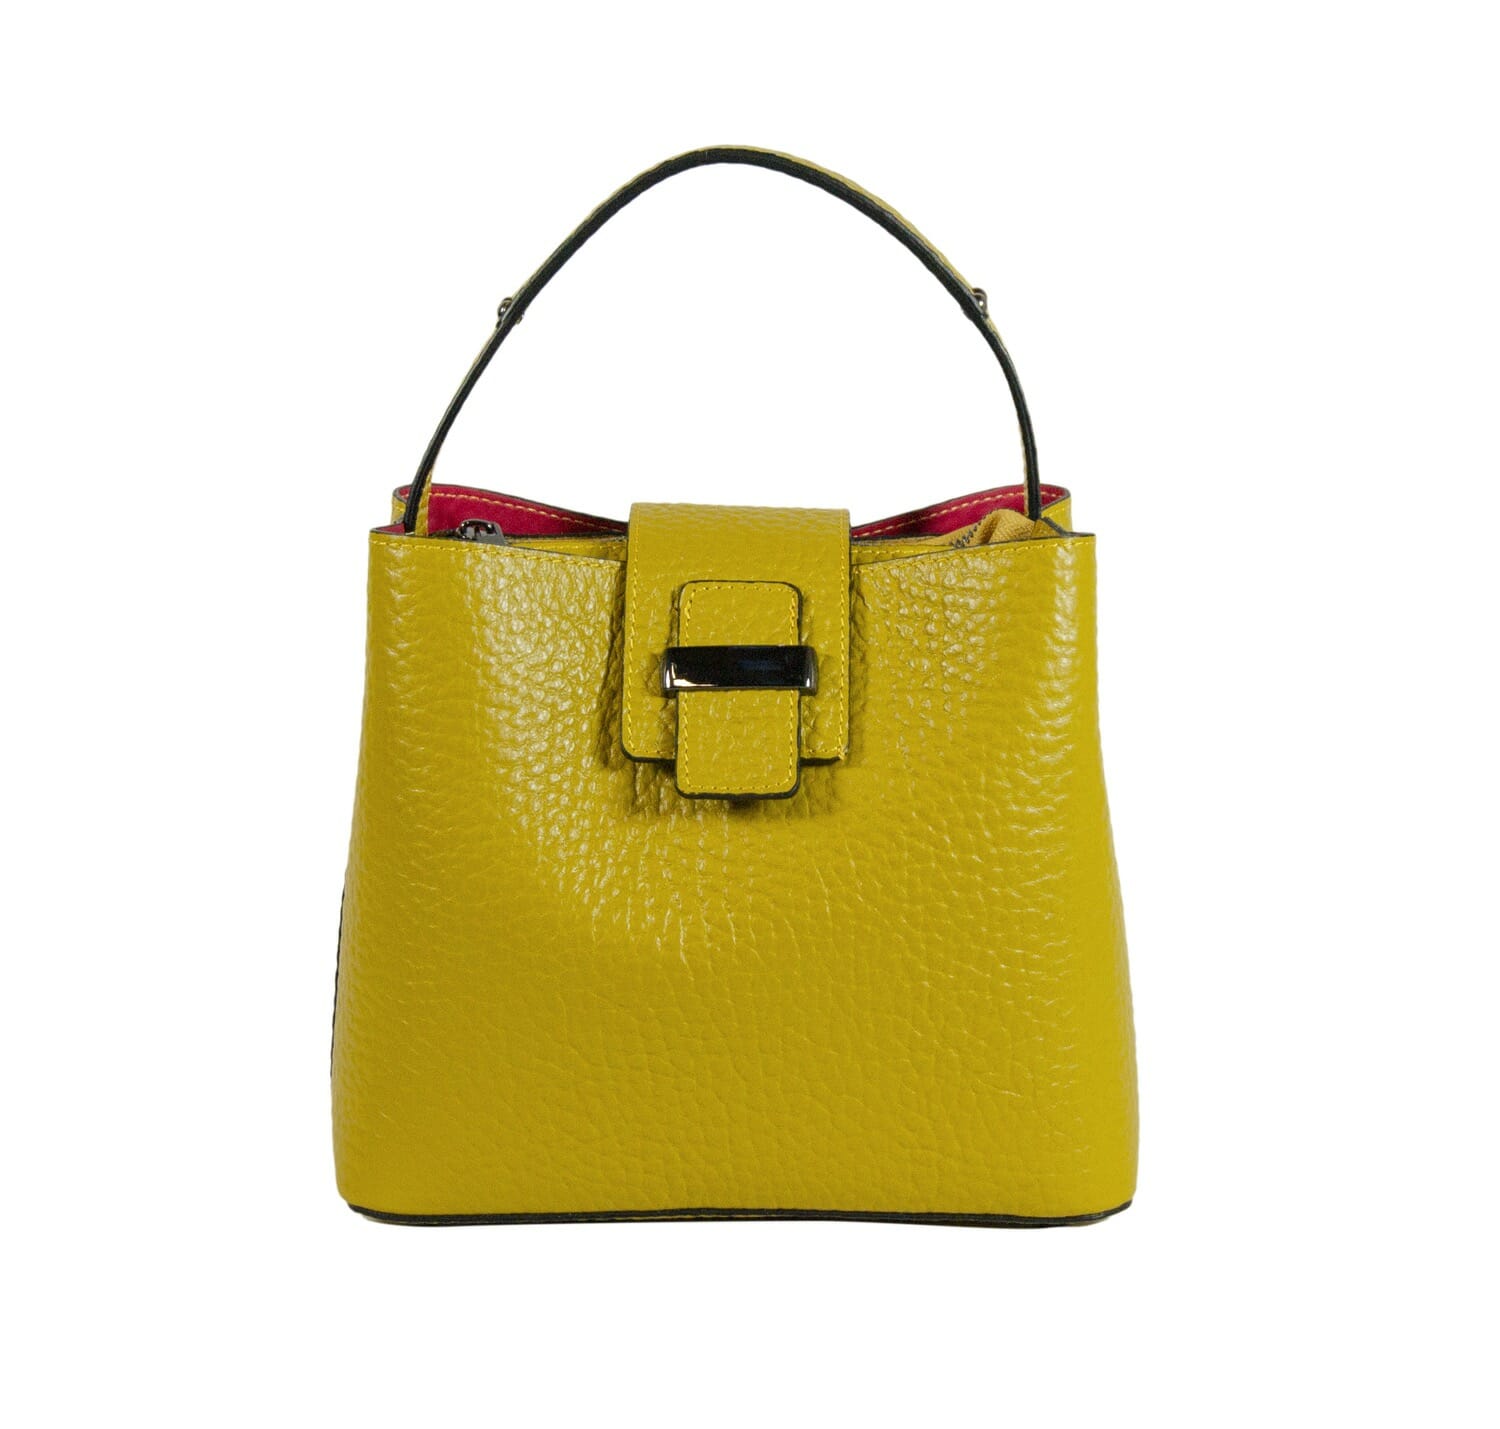 Lola Handbag in genuine leather - YELLOW